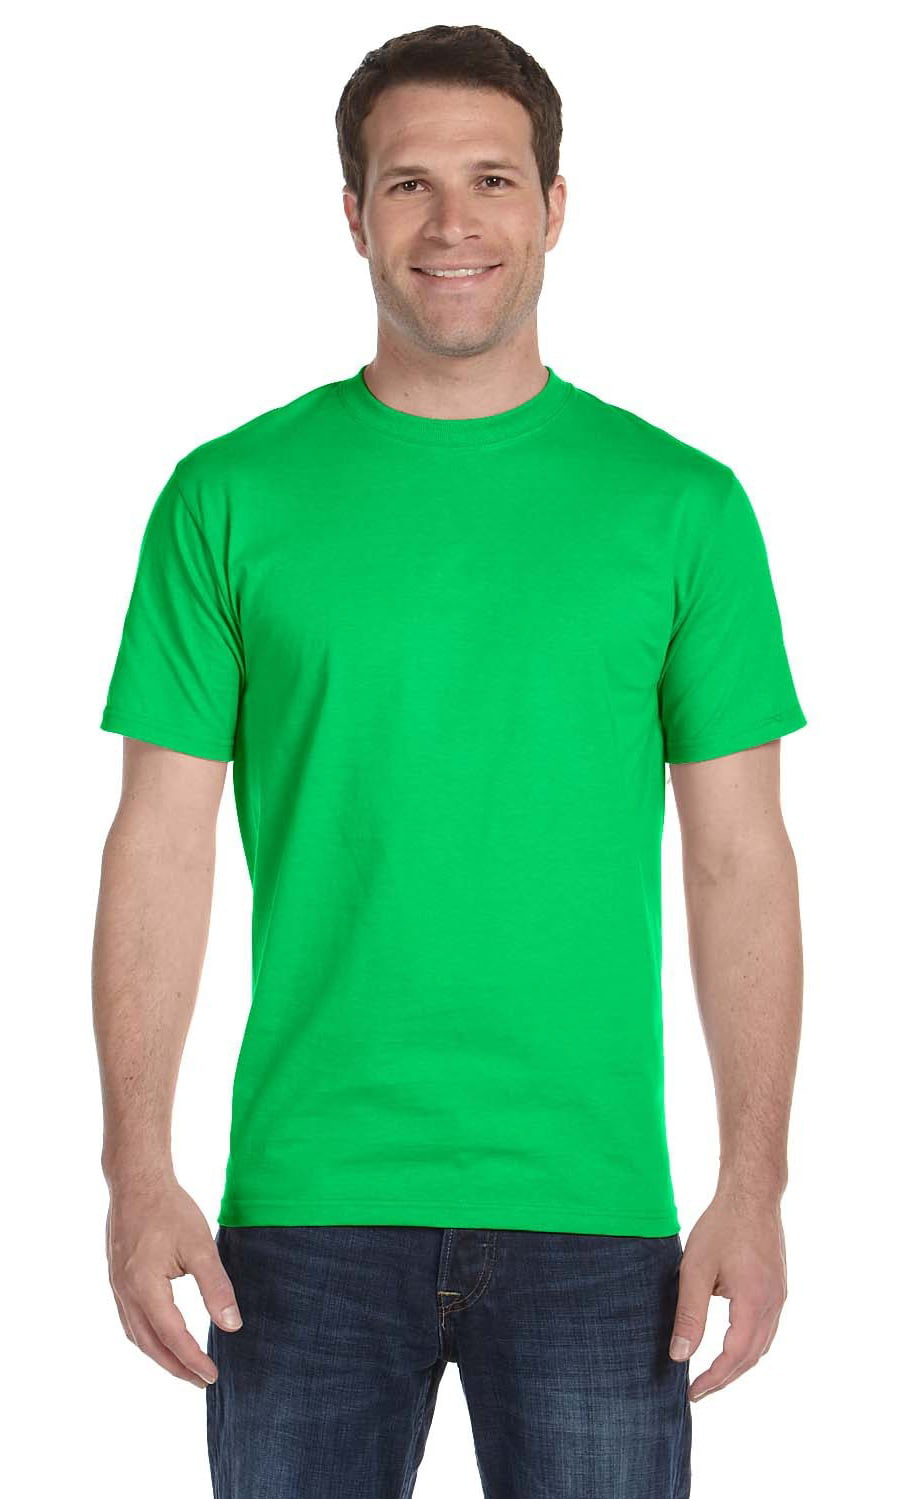 50/50 T-Shirt 3XL - Electric Green Style # G800 - Original Label By Gildan Gildan Adult DryBlend 56 Oz